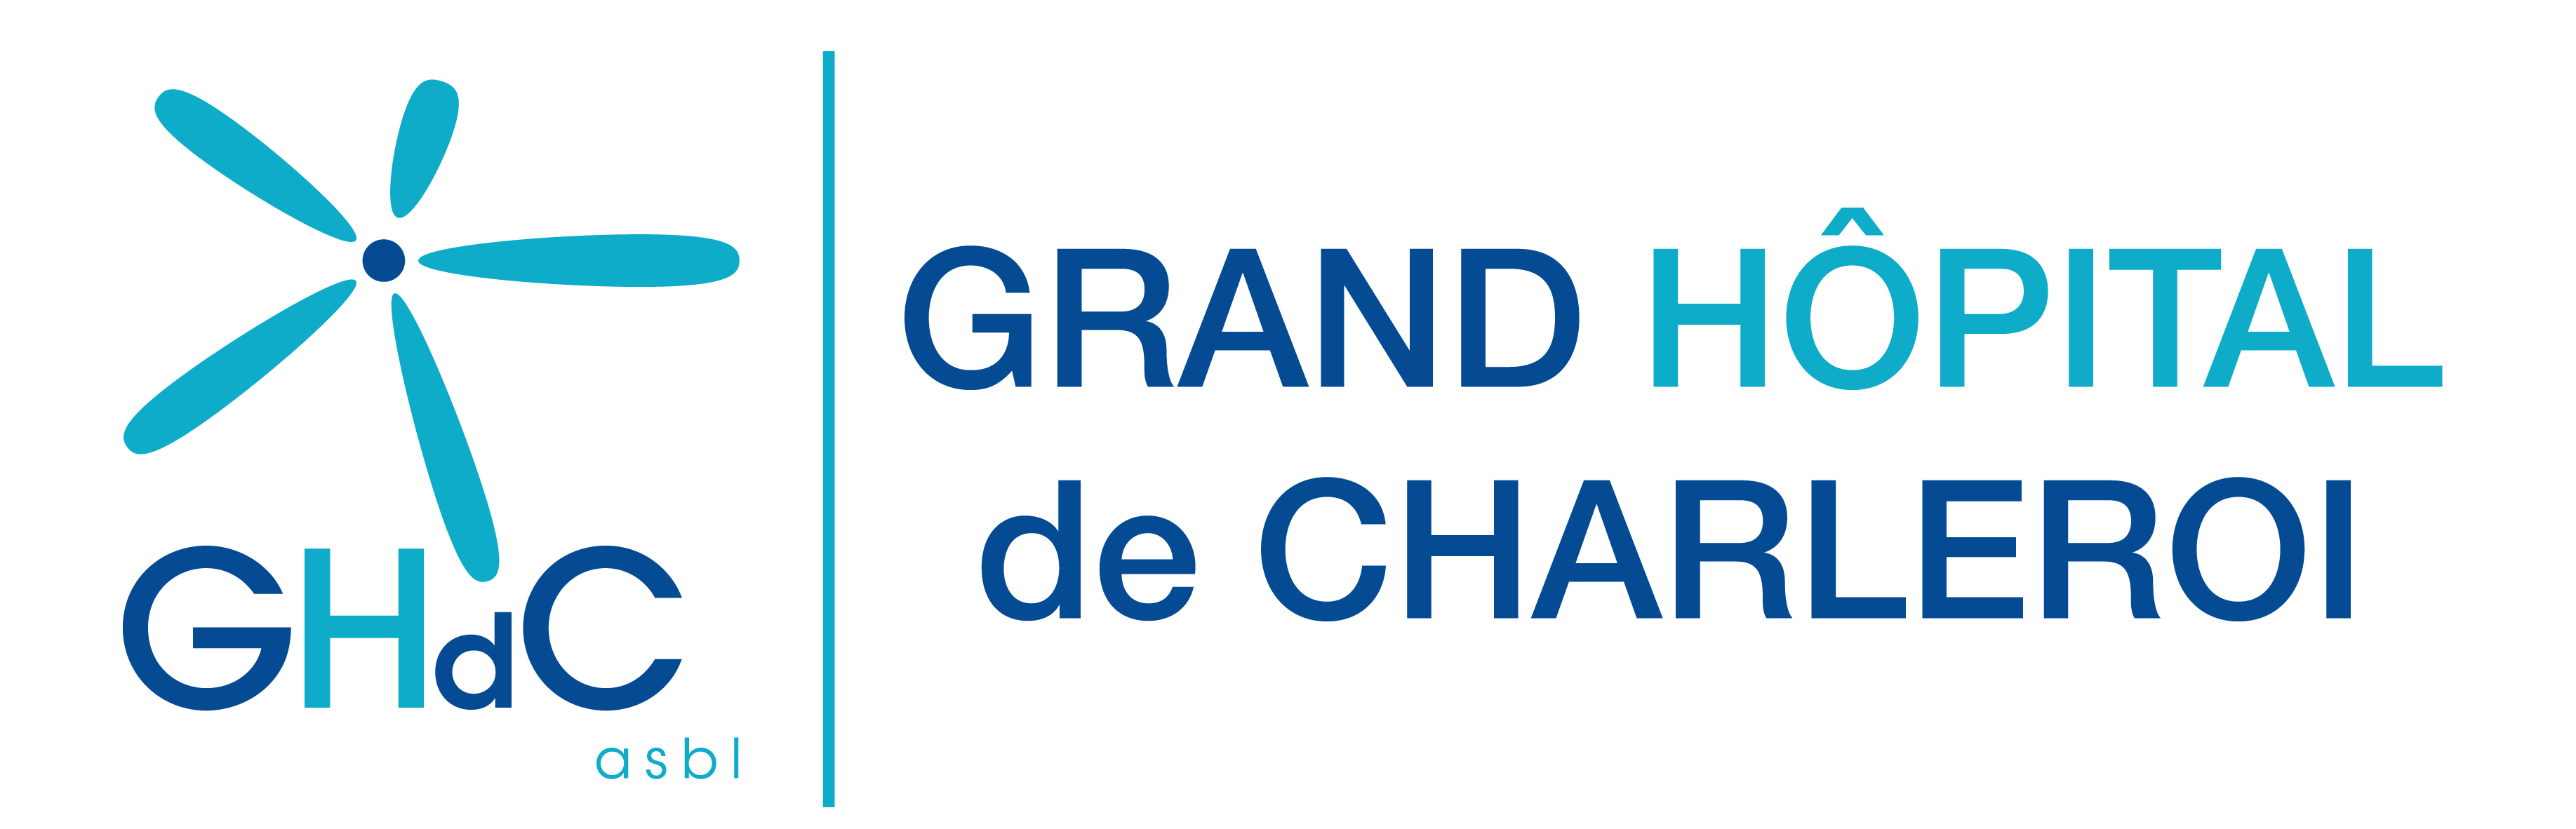 grand hopital de charleroi logo